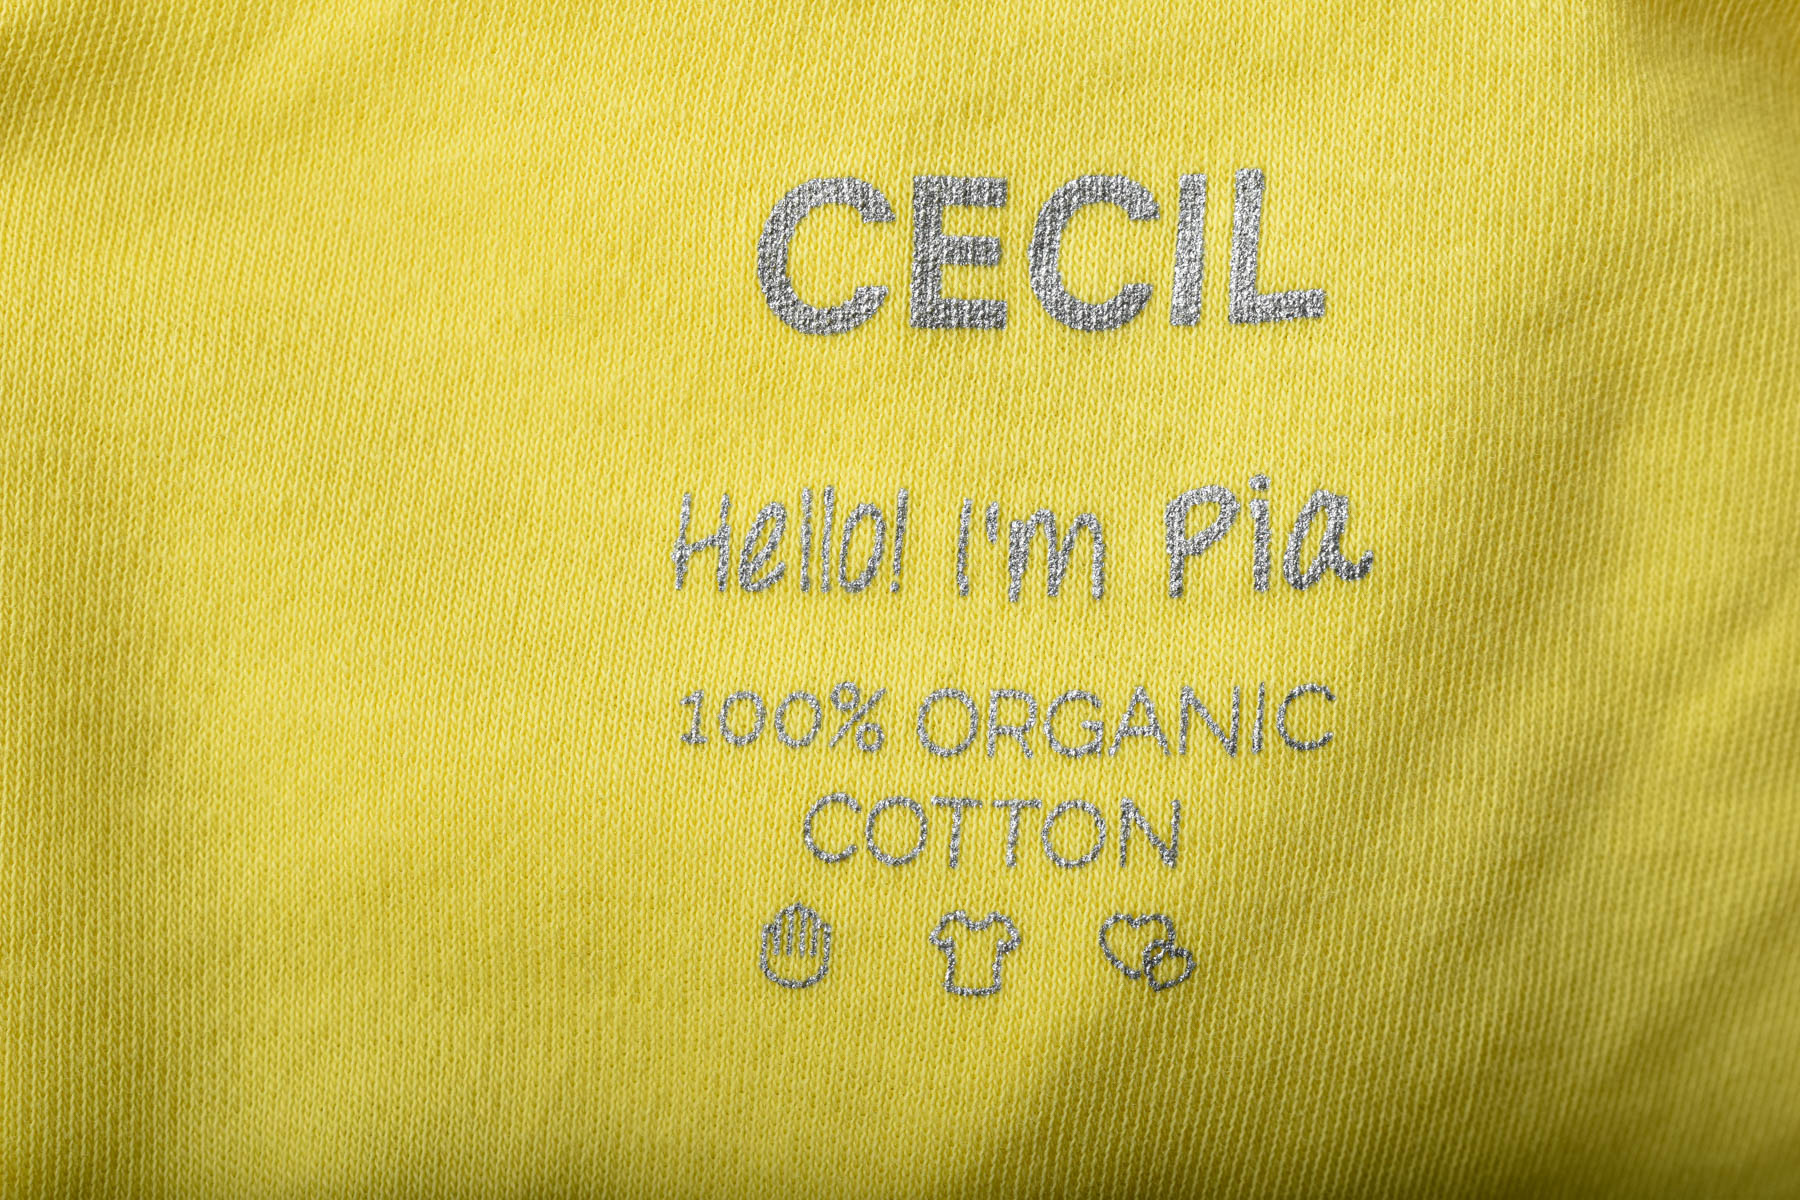 Bluza de damă - CECIL - 2